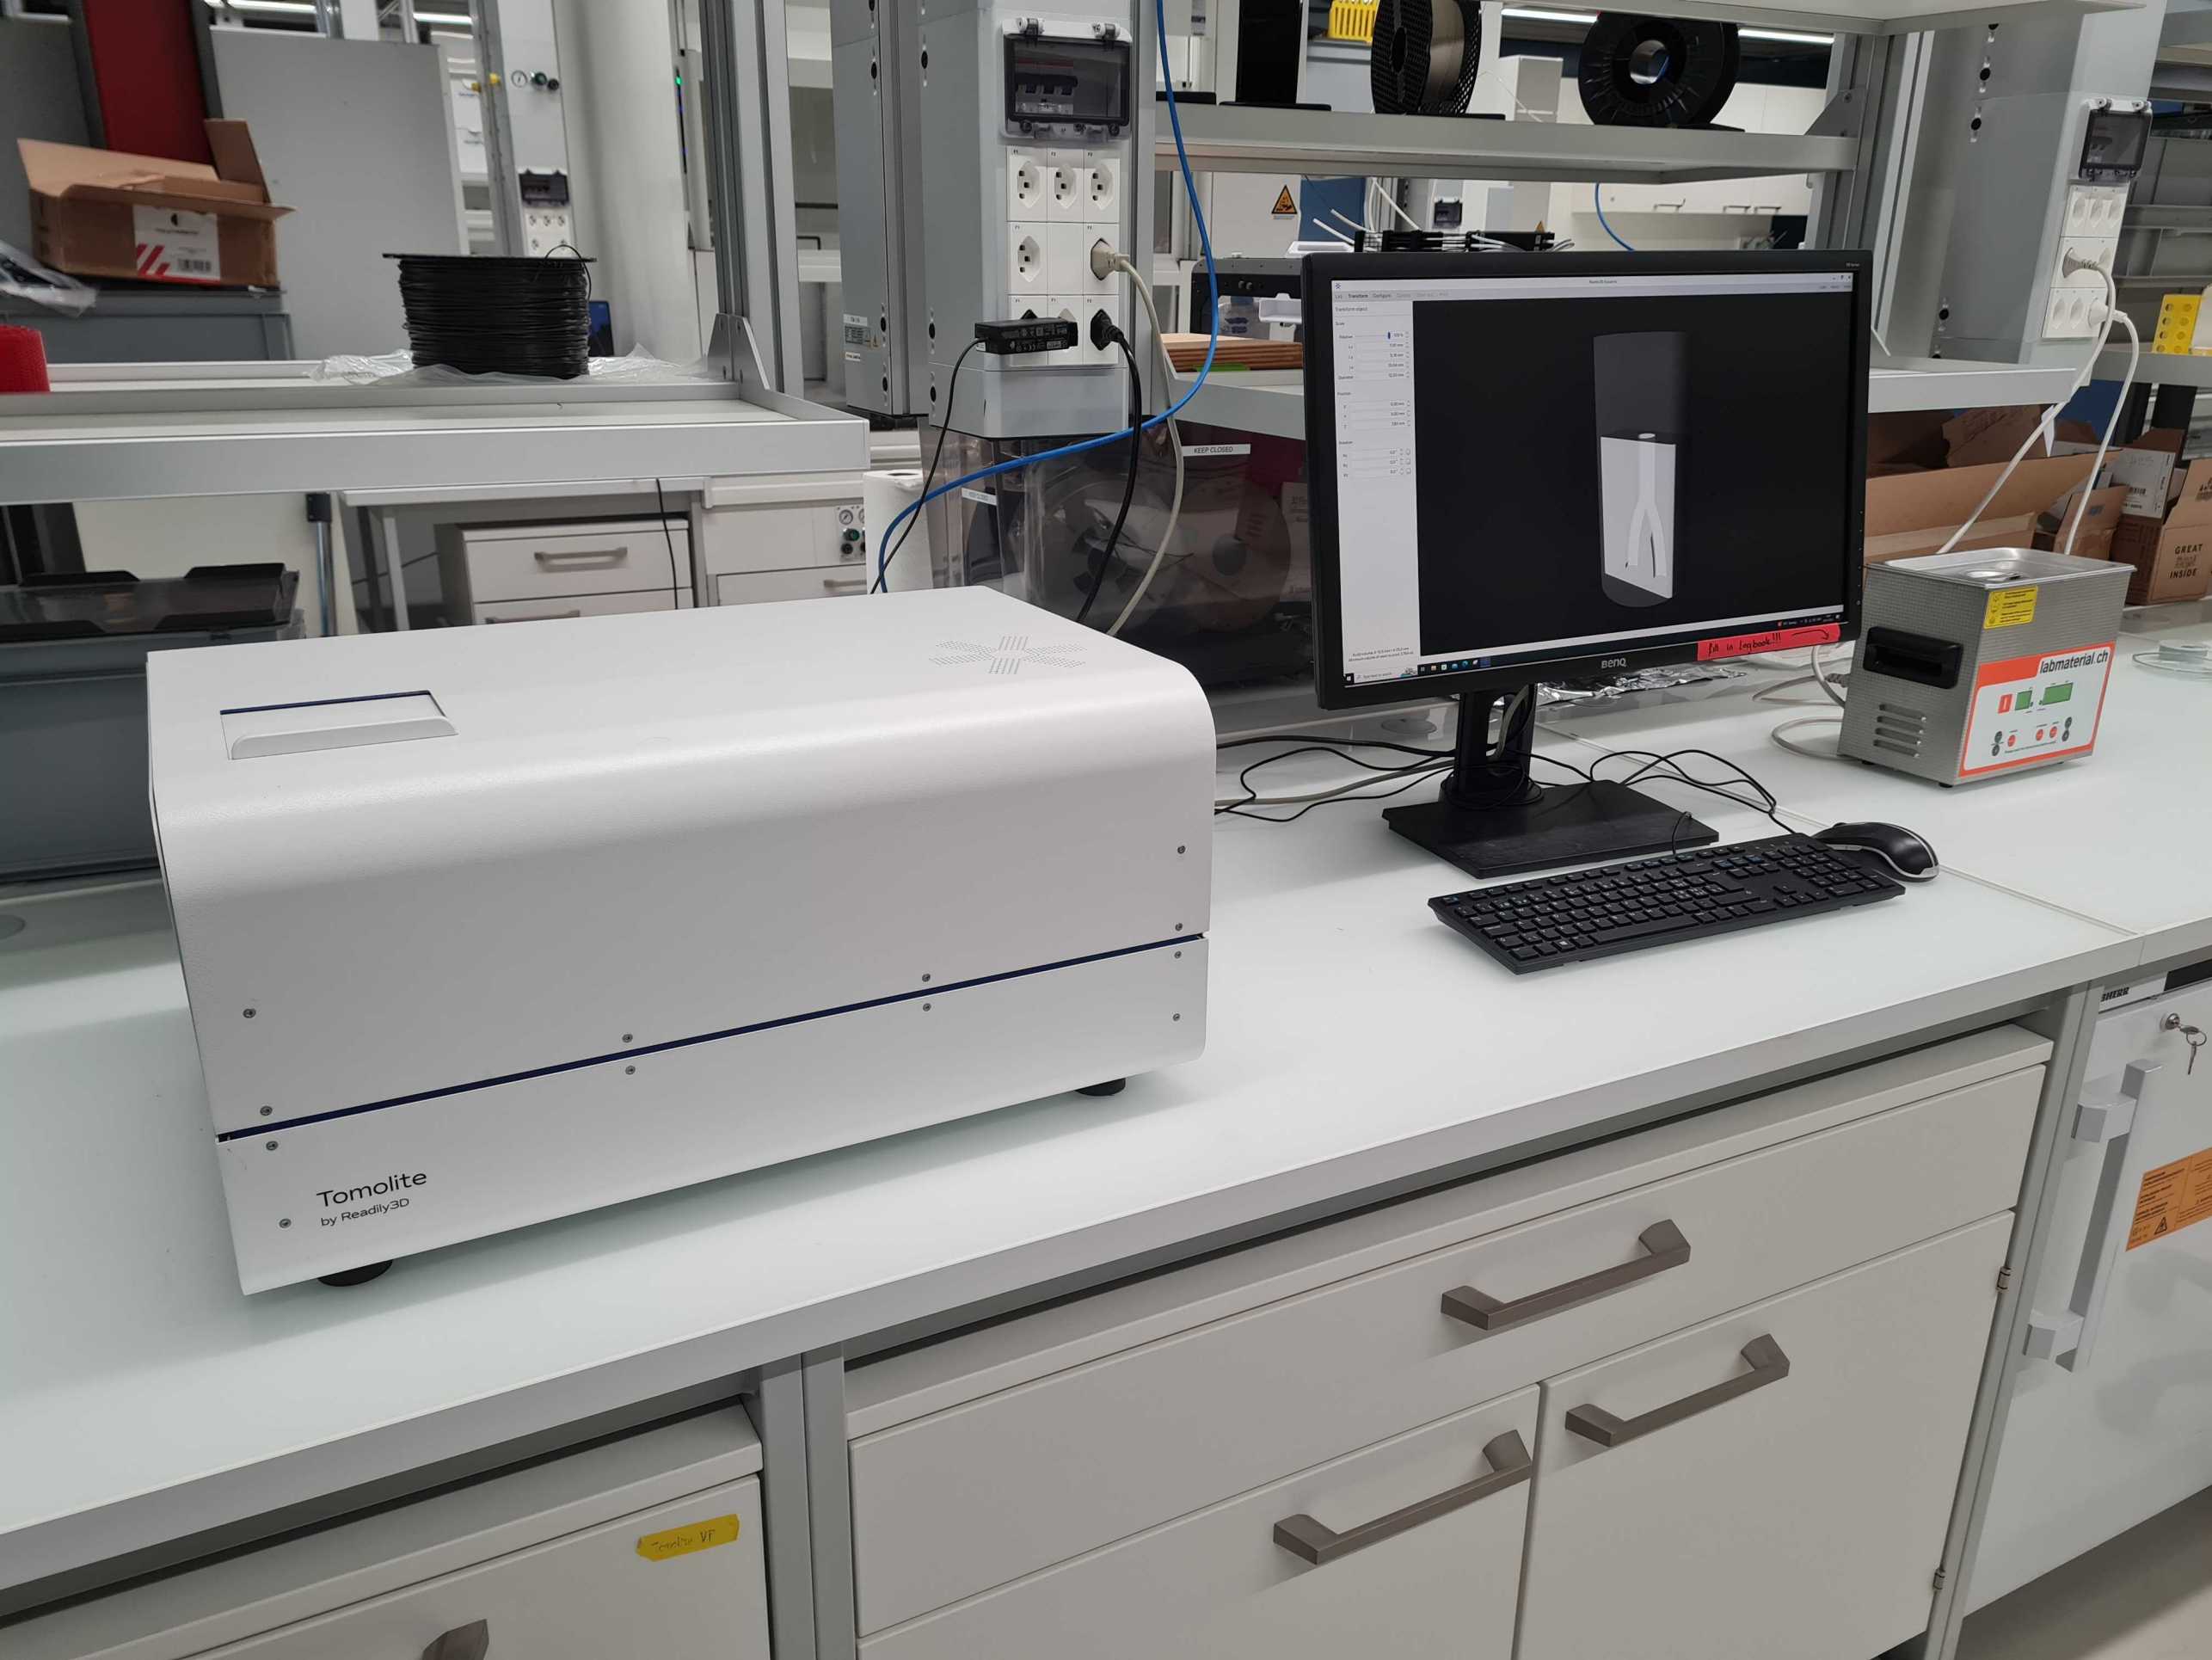 Tomolite volumetric bioprinter